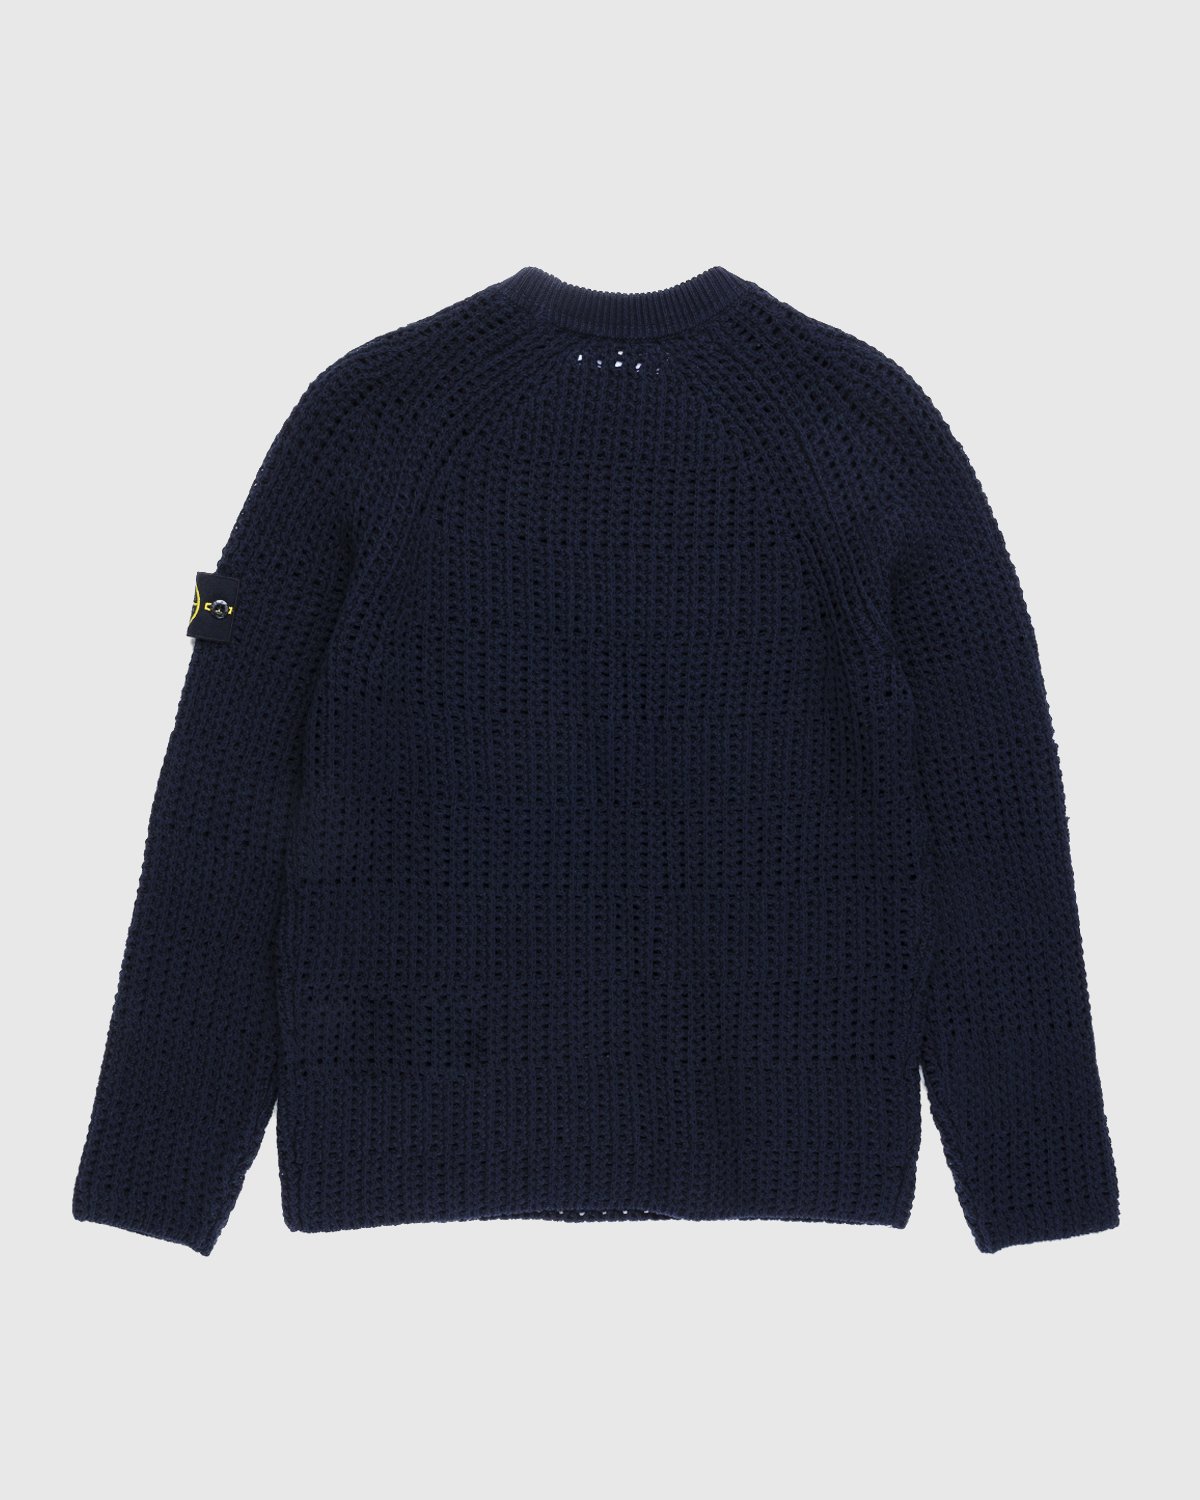 Stone Island - 528D3 Net Stitch Sweater Navy Blue - Clothing - Blue - Image 2